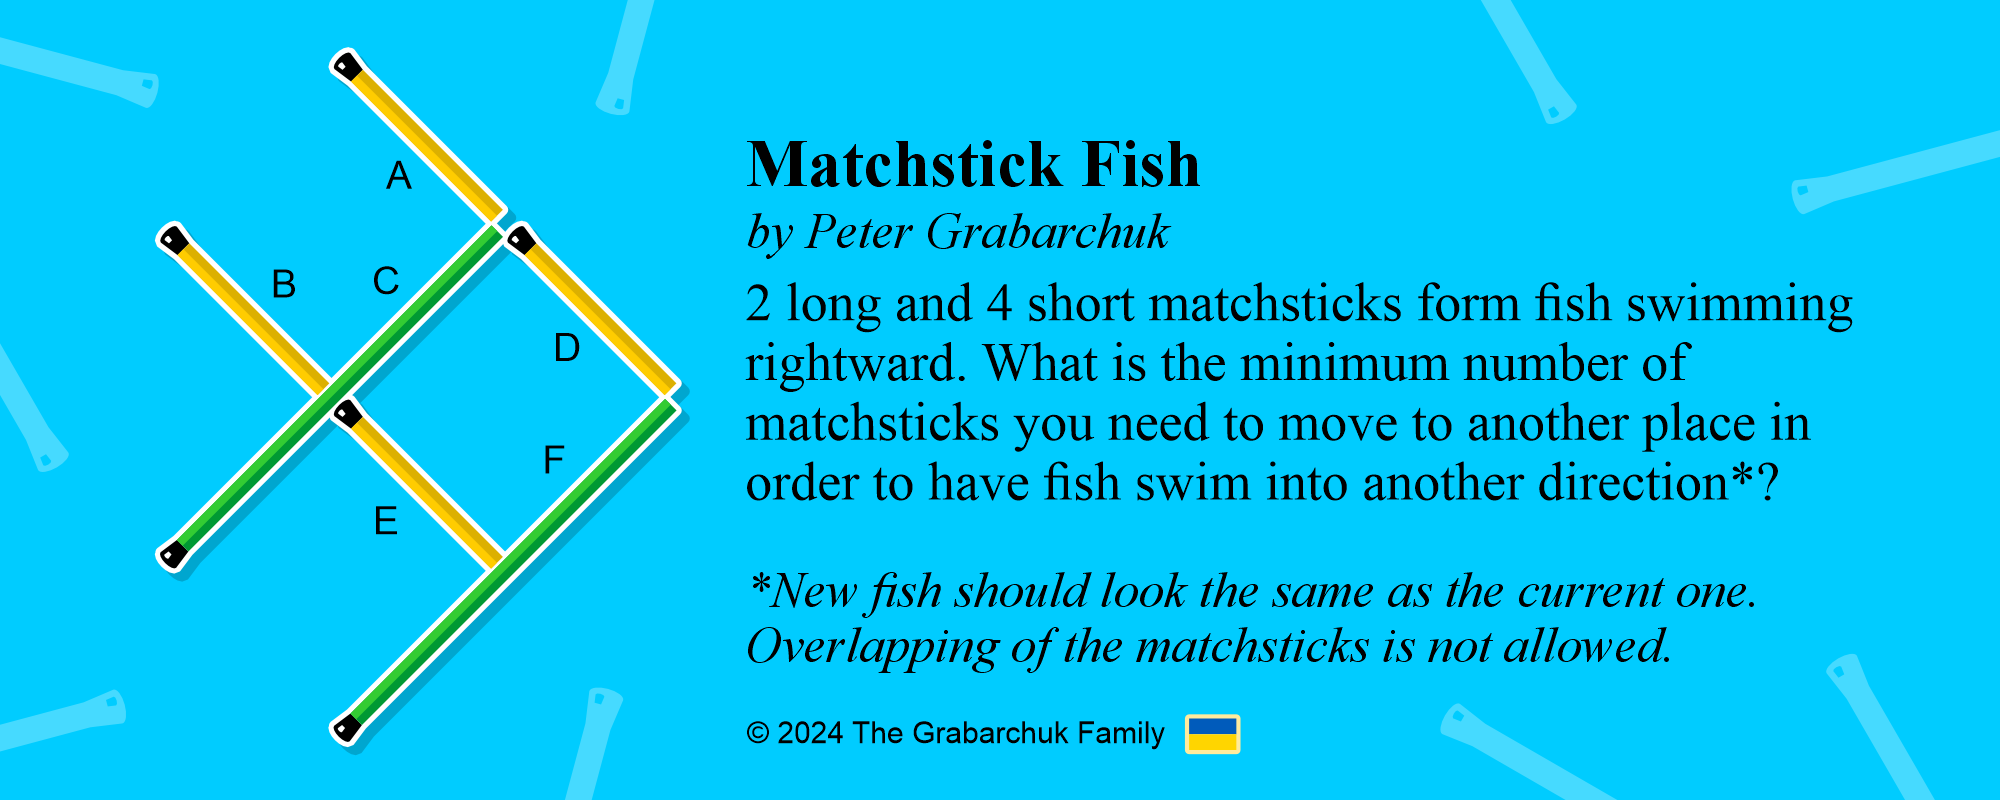 Matchstic kFish by Peter Grabarchuk